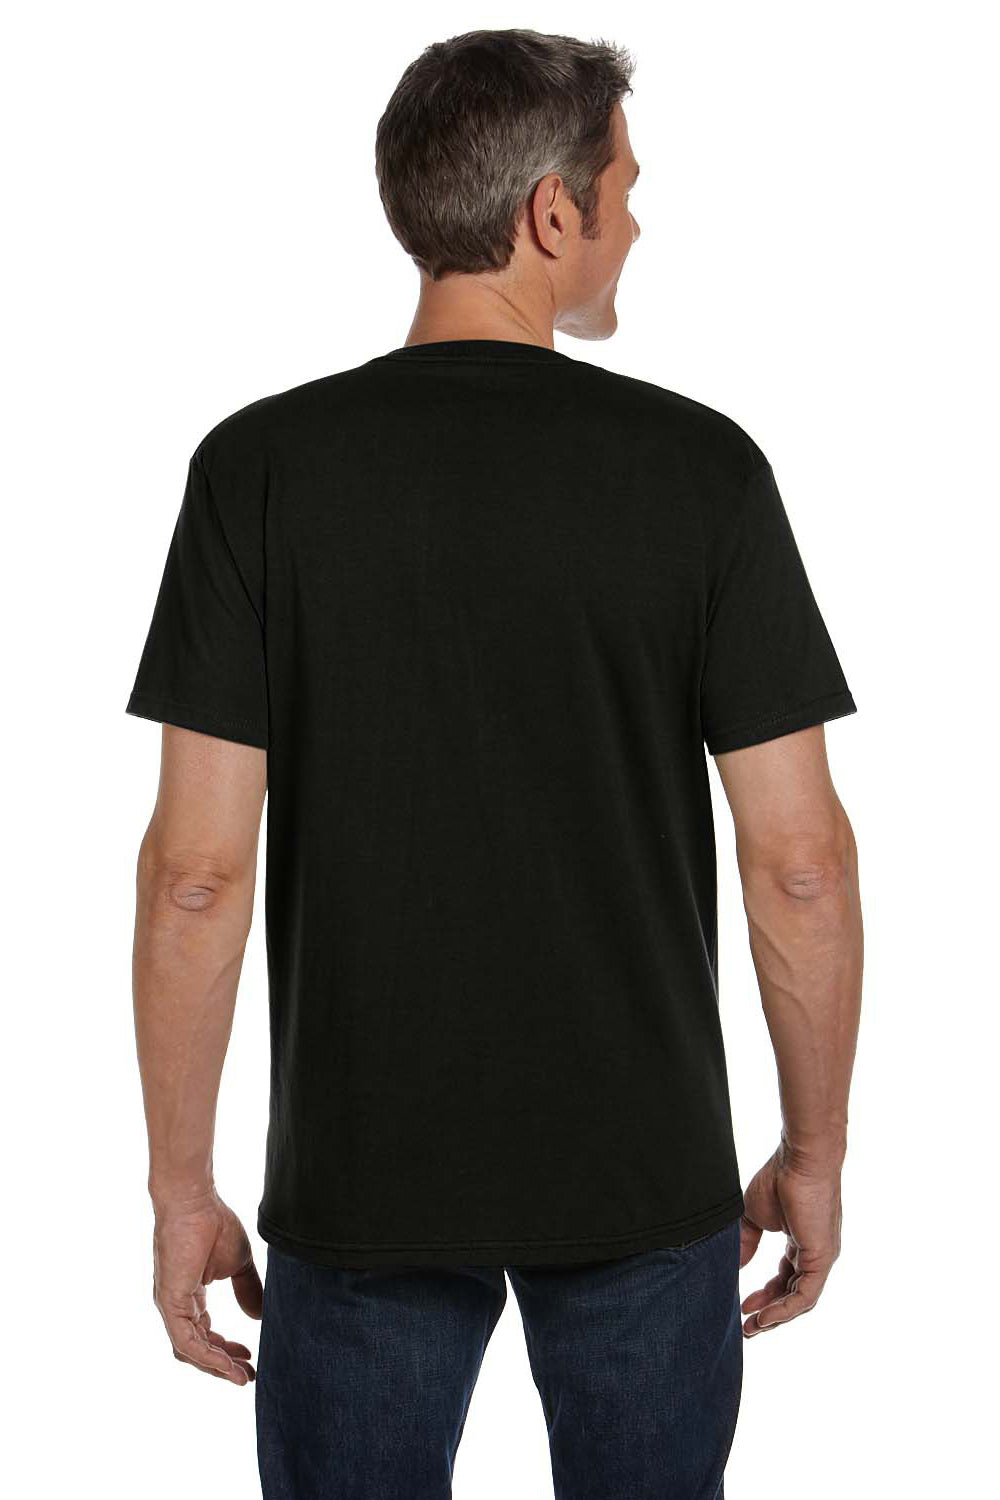 Econscious EC1000 Mens Short Sleeve Crewneck T-Shirt Black Back